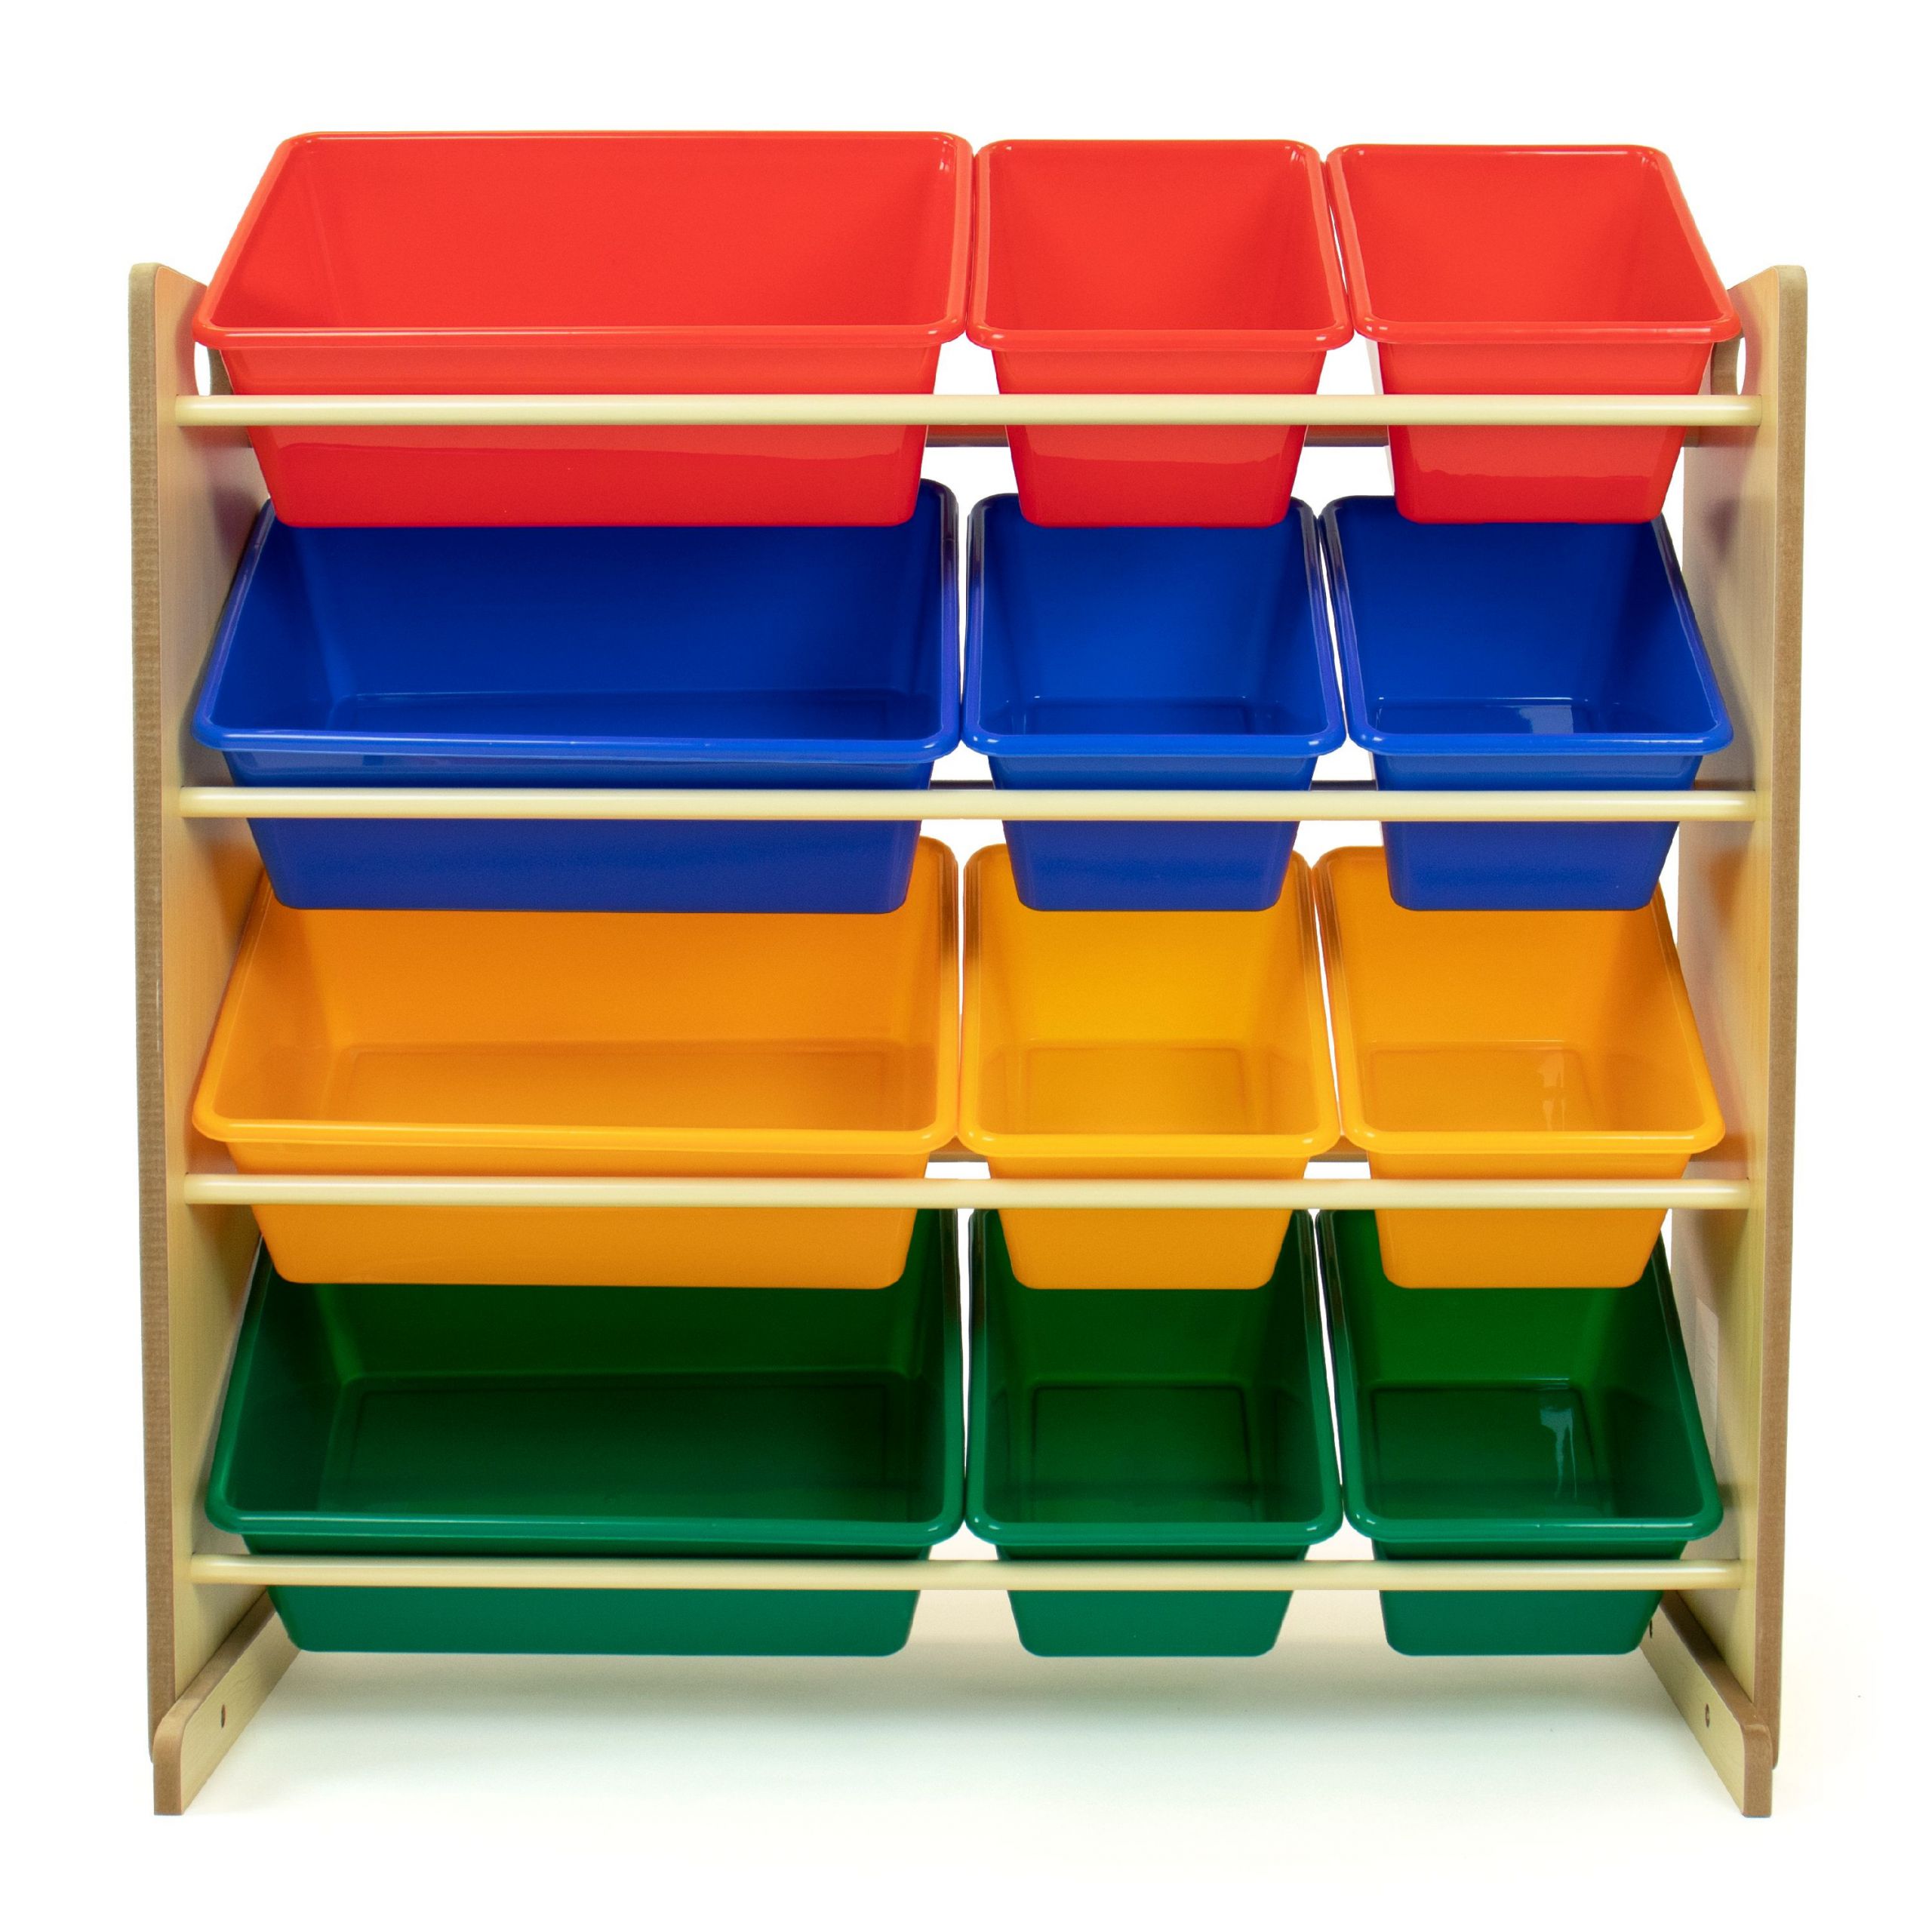 Storage Bin For Kids
 Tot Tutors Kids Toy Storage Organizer with 12 Plastic Bins